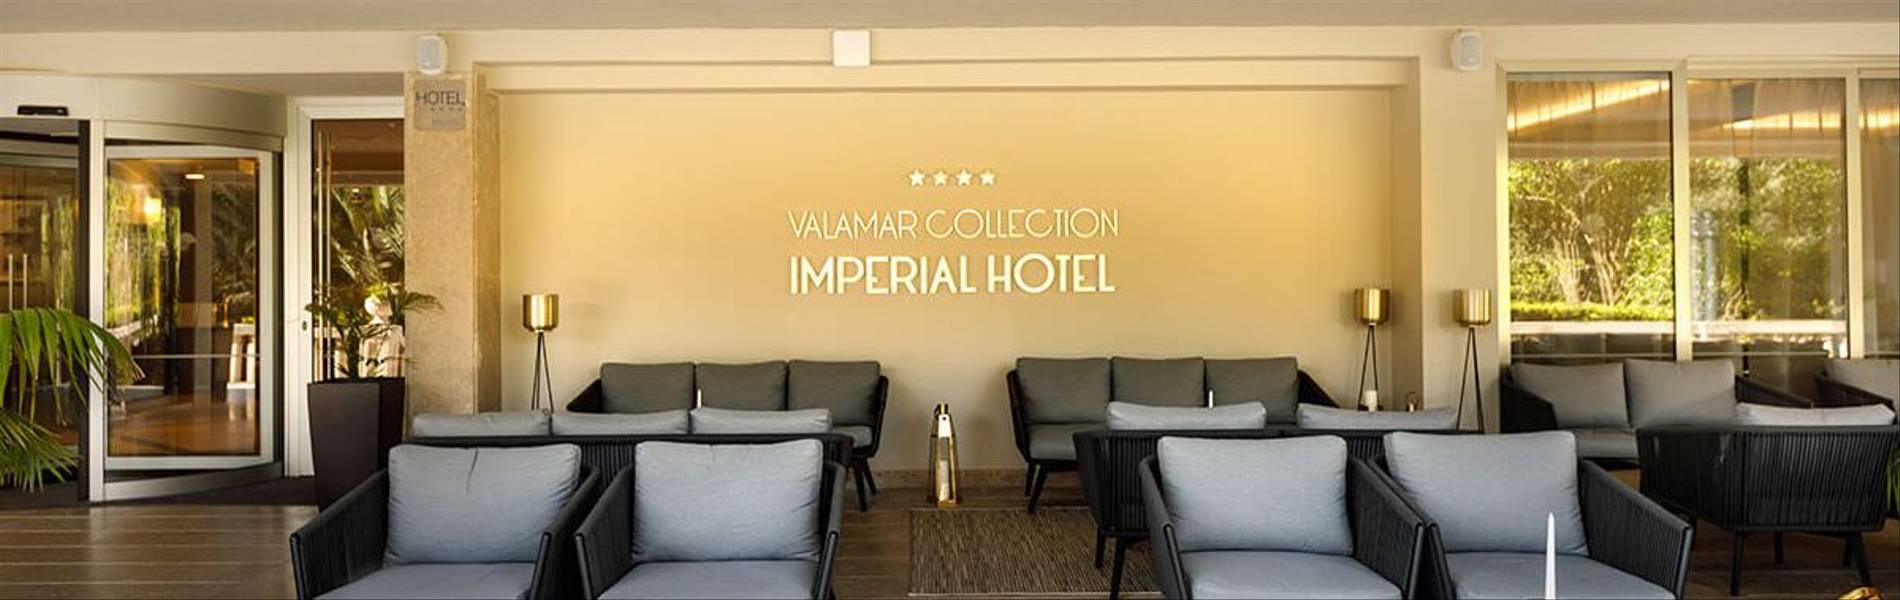 valamar-imperial-hotel-entrance.jpg